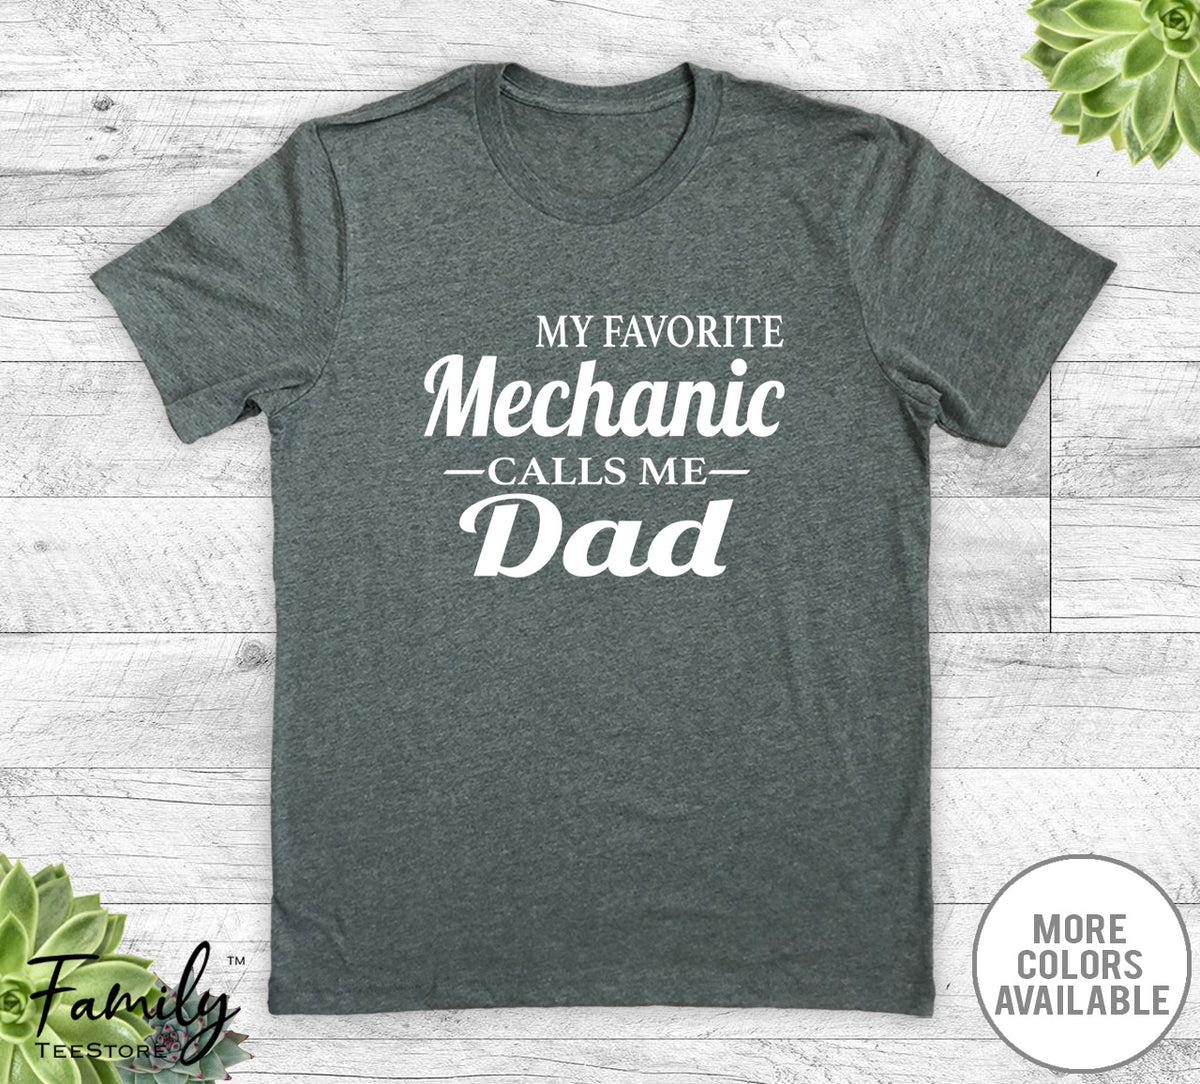 My Favorite Mechanic Calls Me Dad - Unisex T-shirt - Mechanic's Dad Shirt - Mechanic's Dad Gift